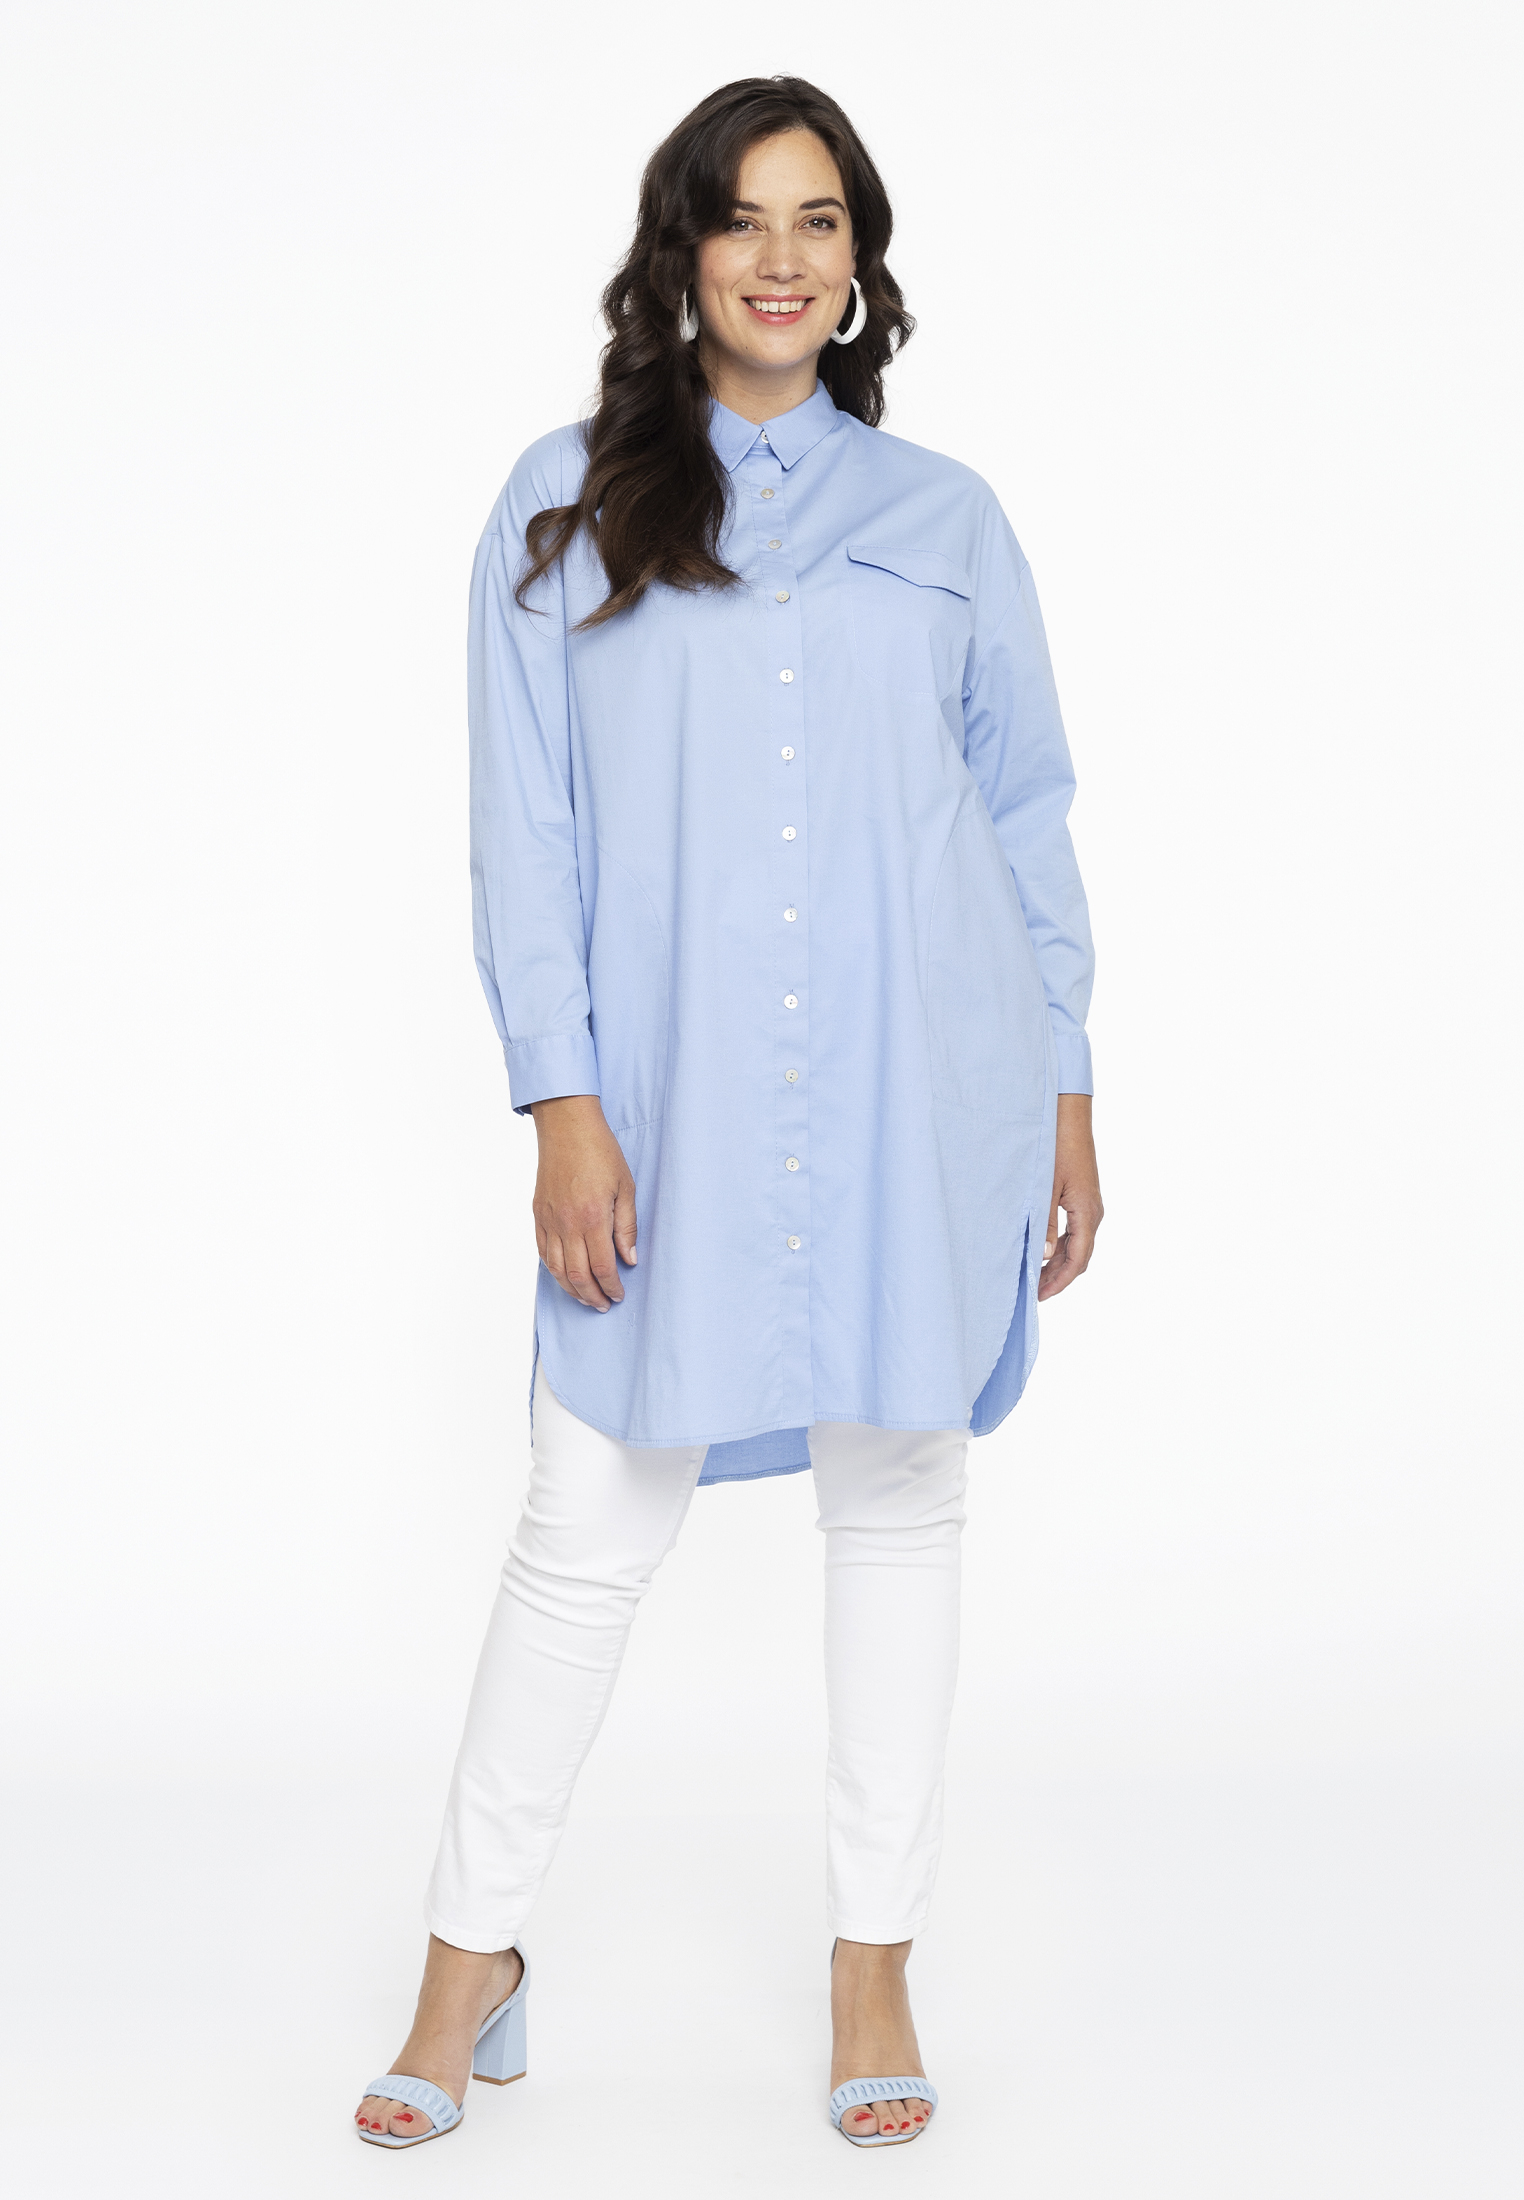 Blouse-dress buttoned POPLIN STRETCH - white light blue